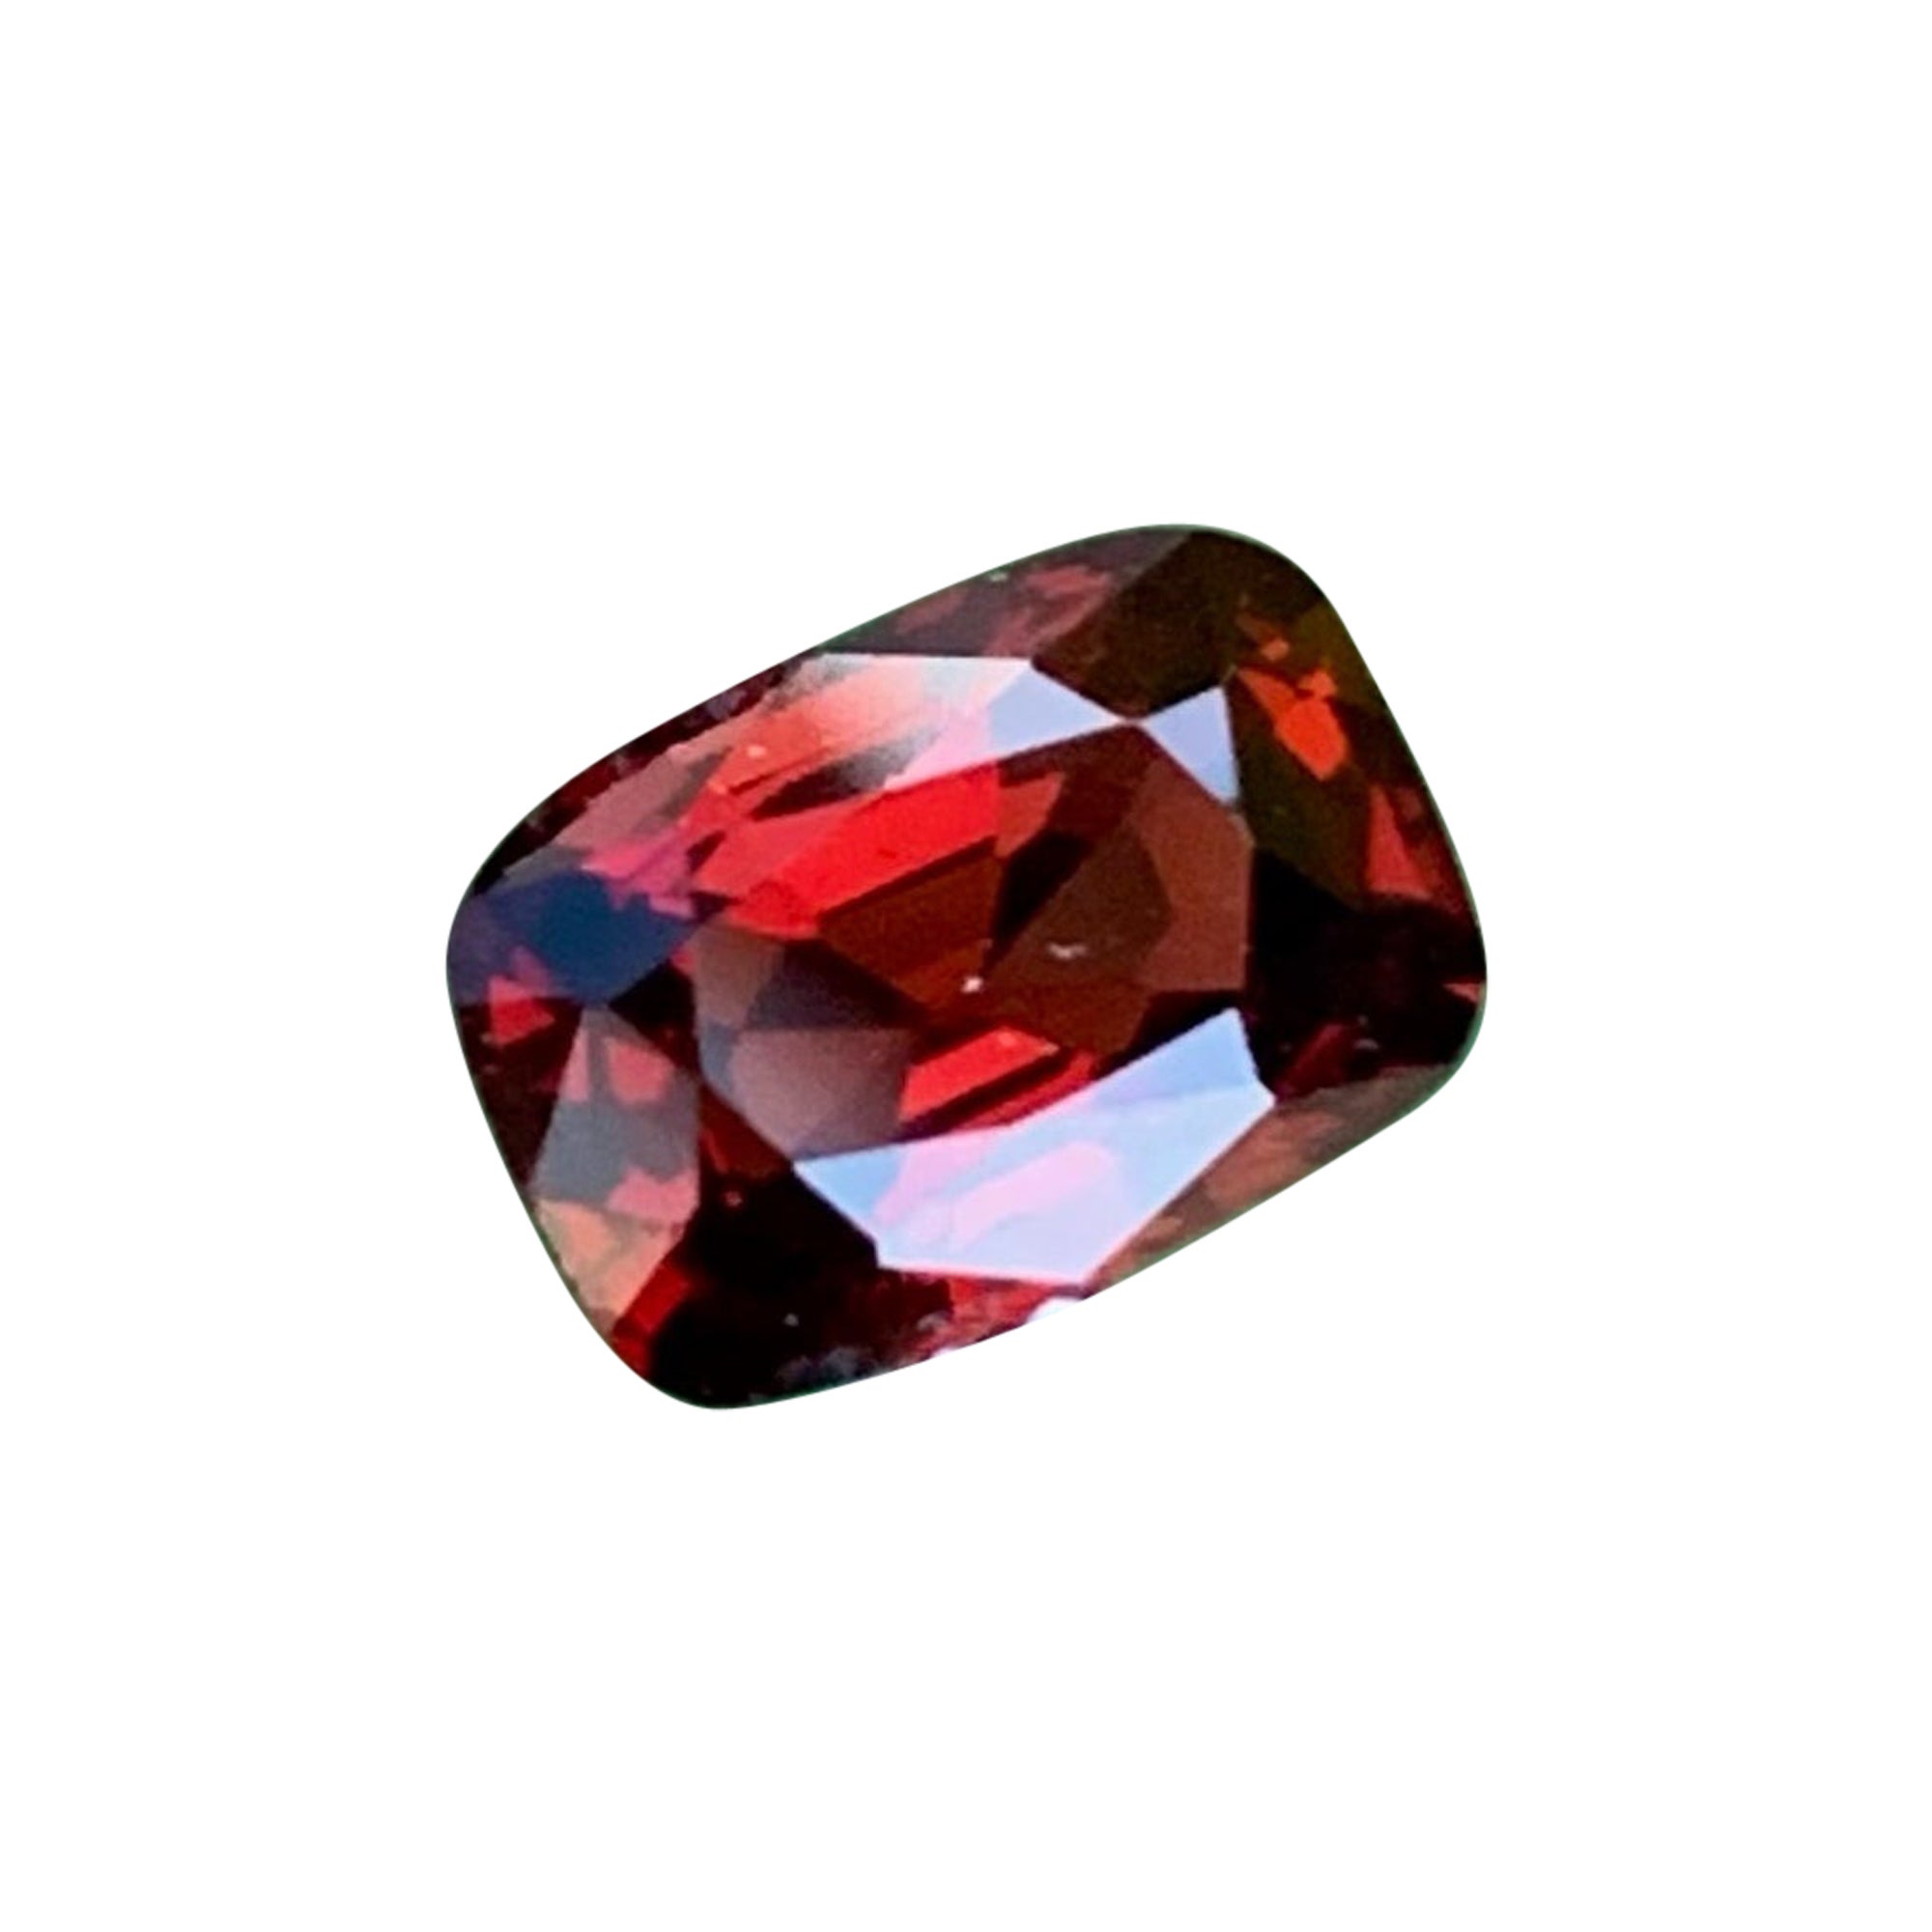 Exceptional Red Spinel Loose Gemstone 1.20 Lovely Spinel Loose Spinel Gems For Sale